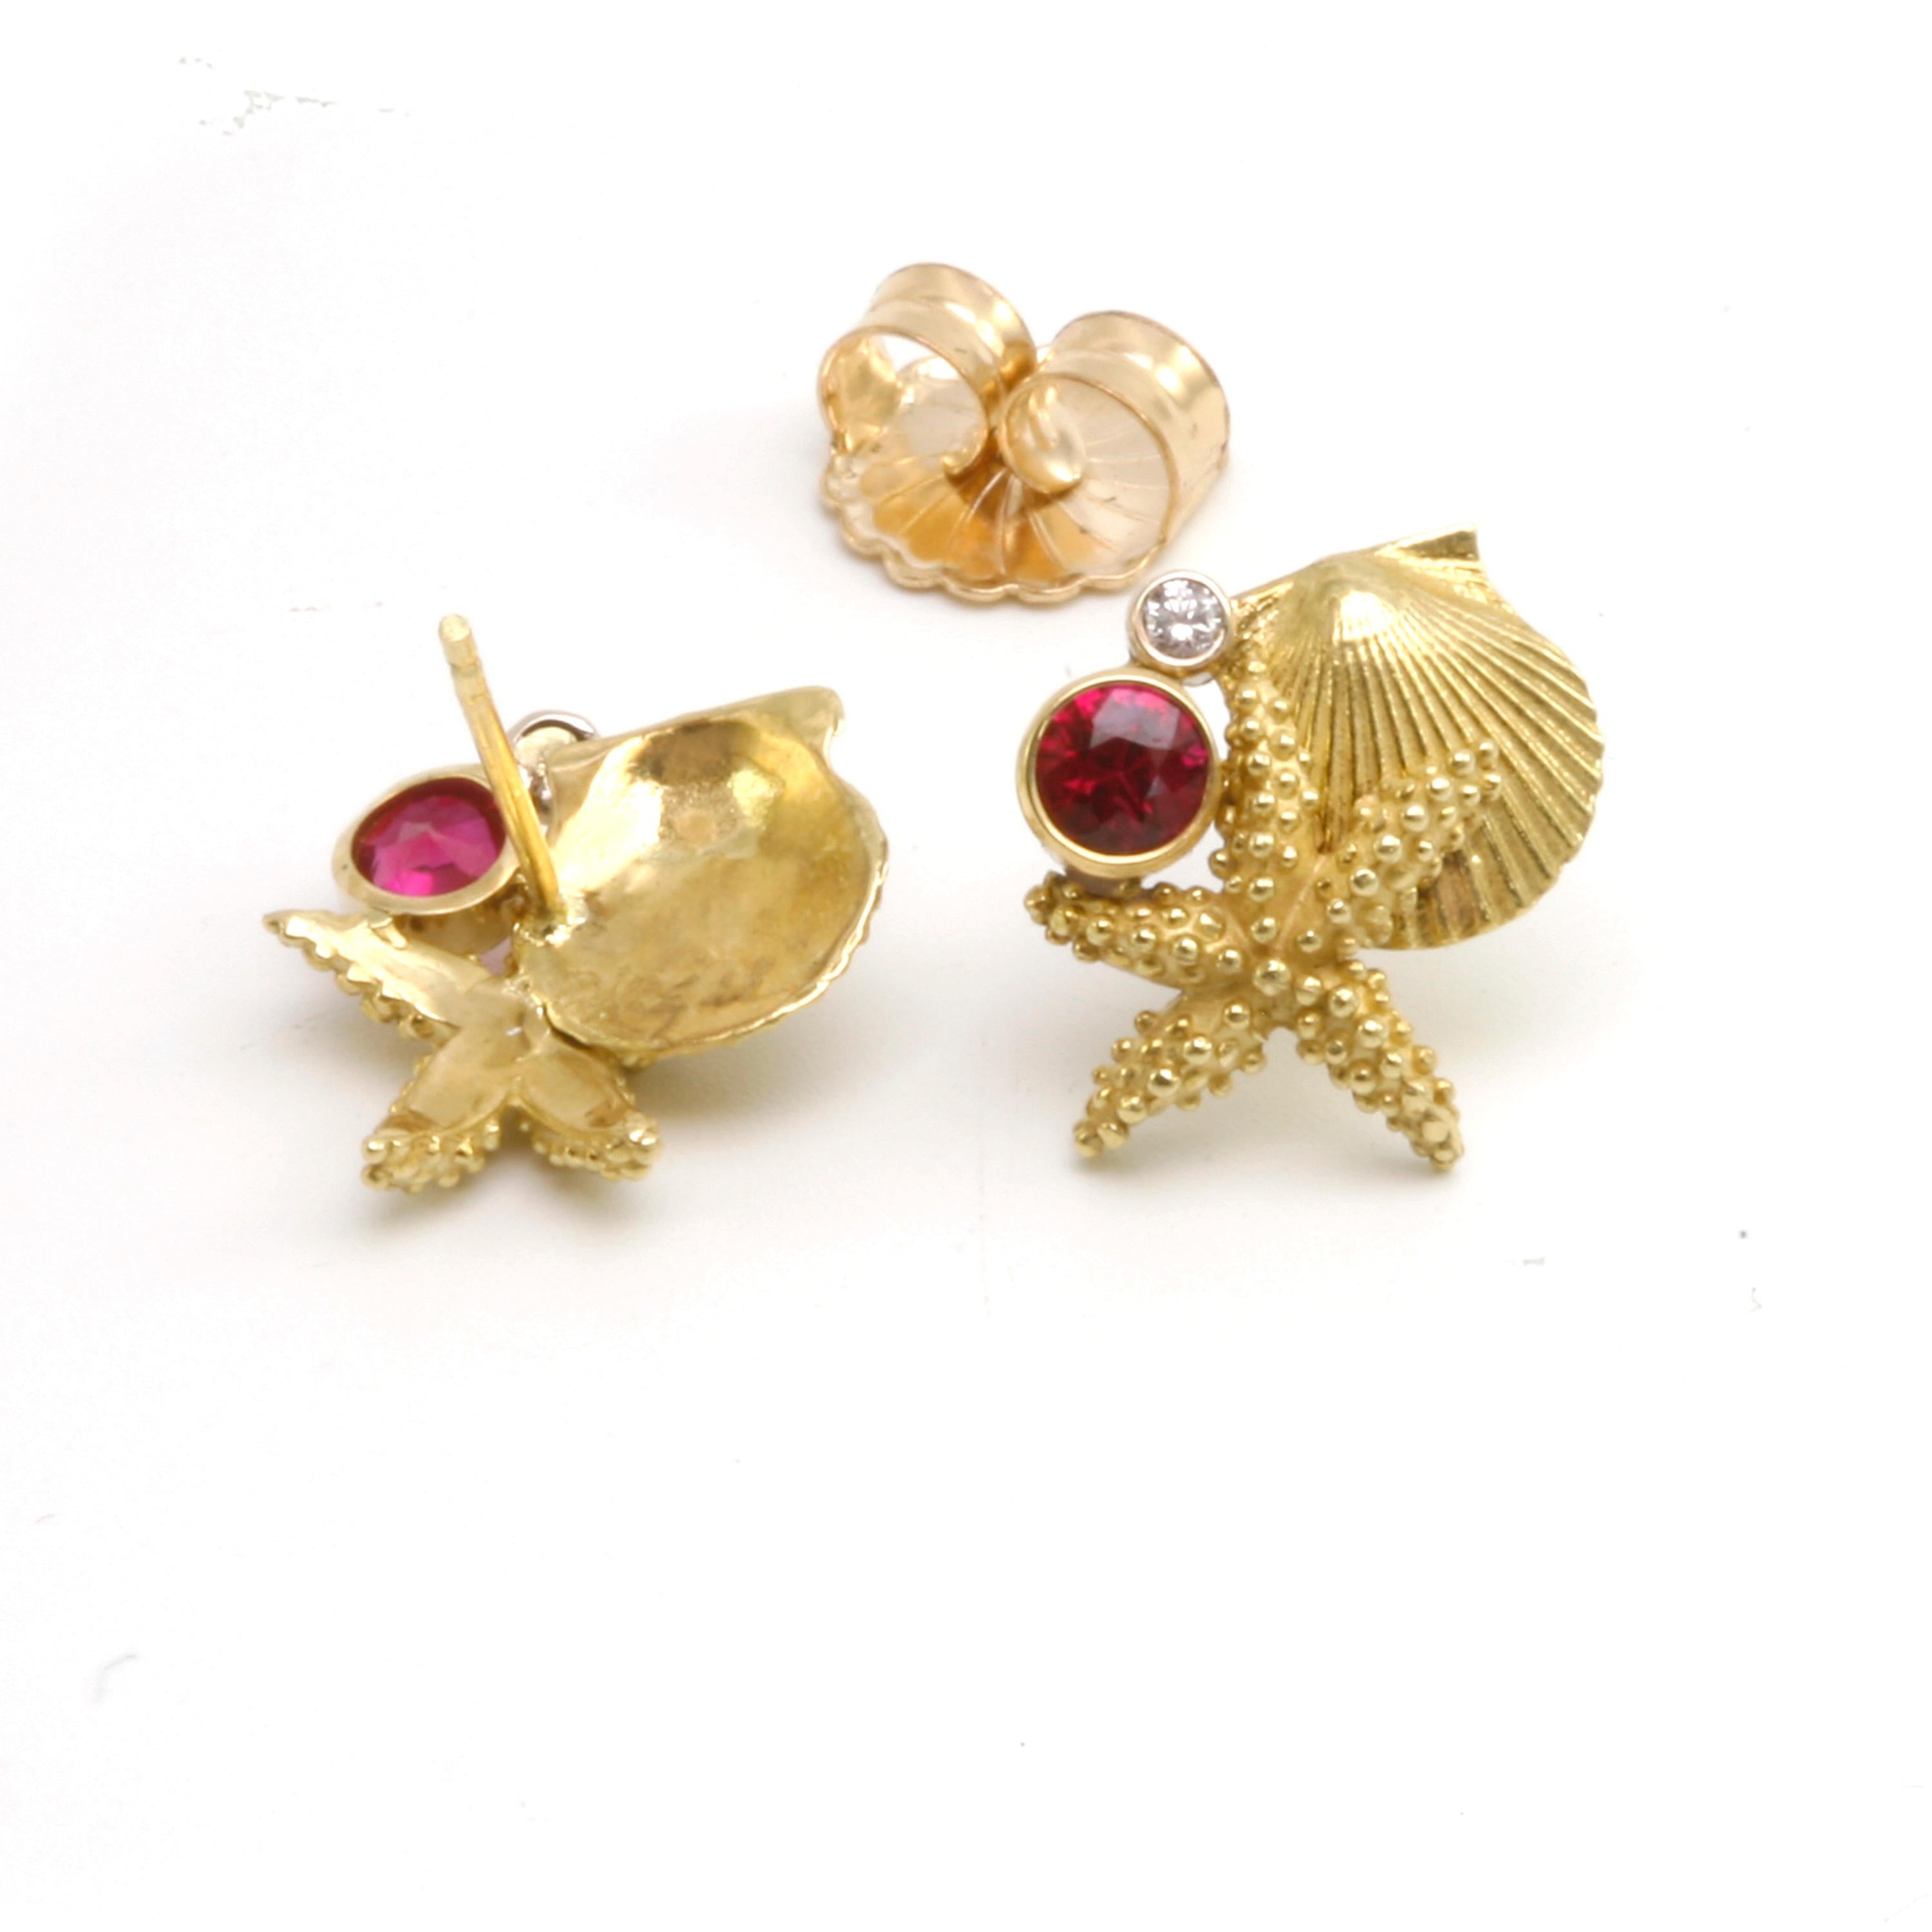 Artisan Diana Kim England Starfish, Scallop, Ruby, and Diamond Earrings in 18k For Sale